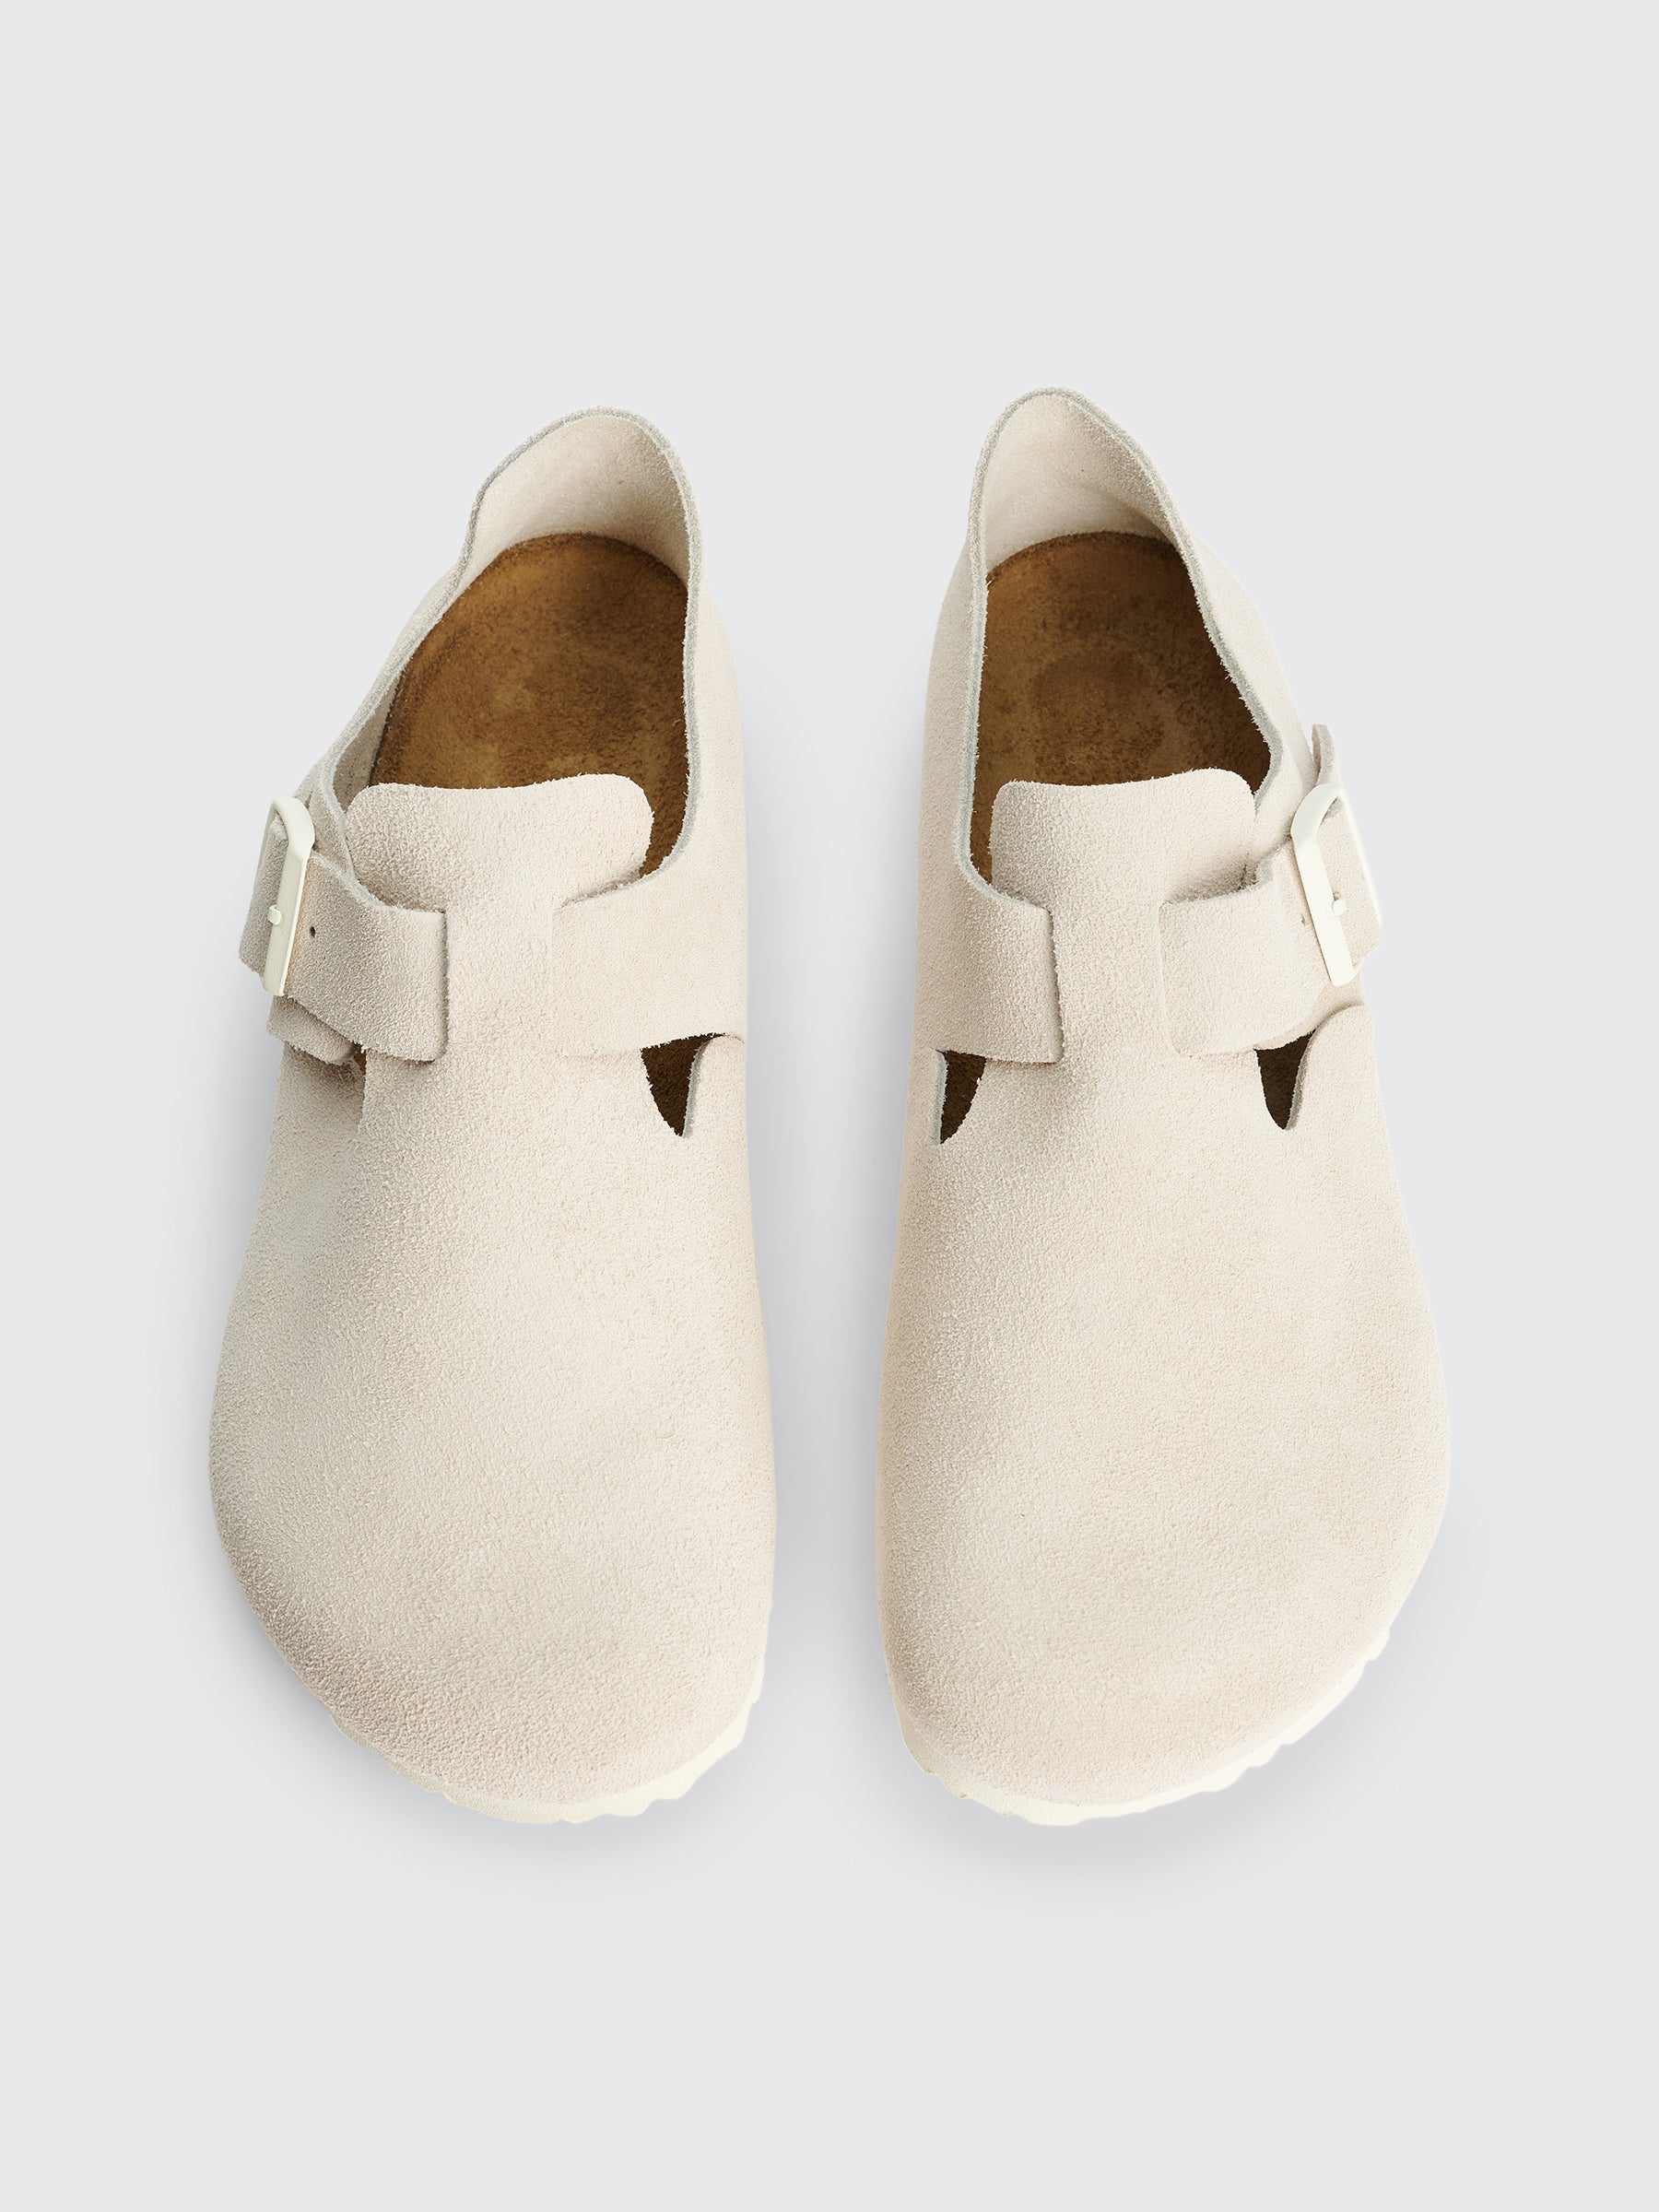 Birkenstock London Suede Sandals Antique White